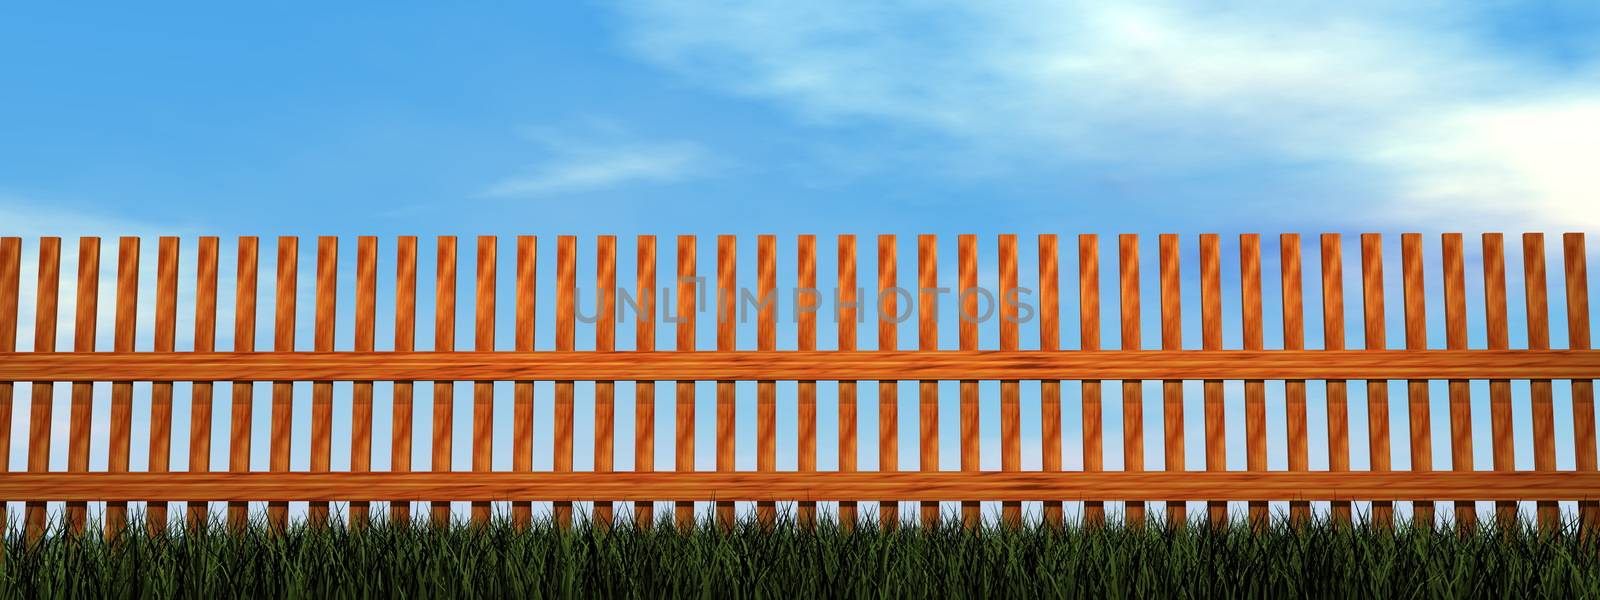 Wooden fence upon green grass - 3D render